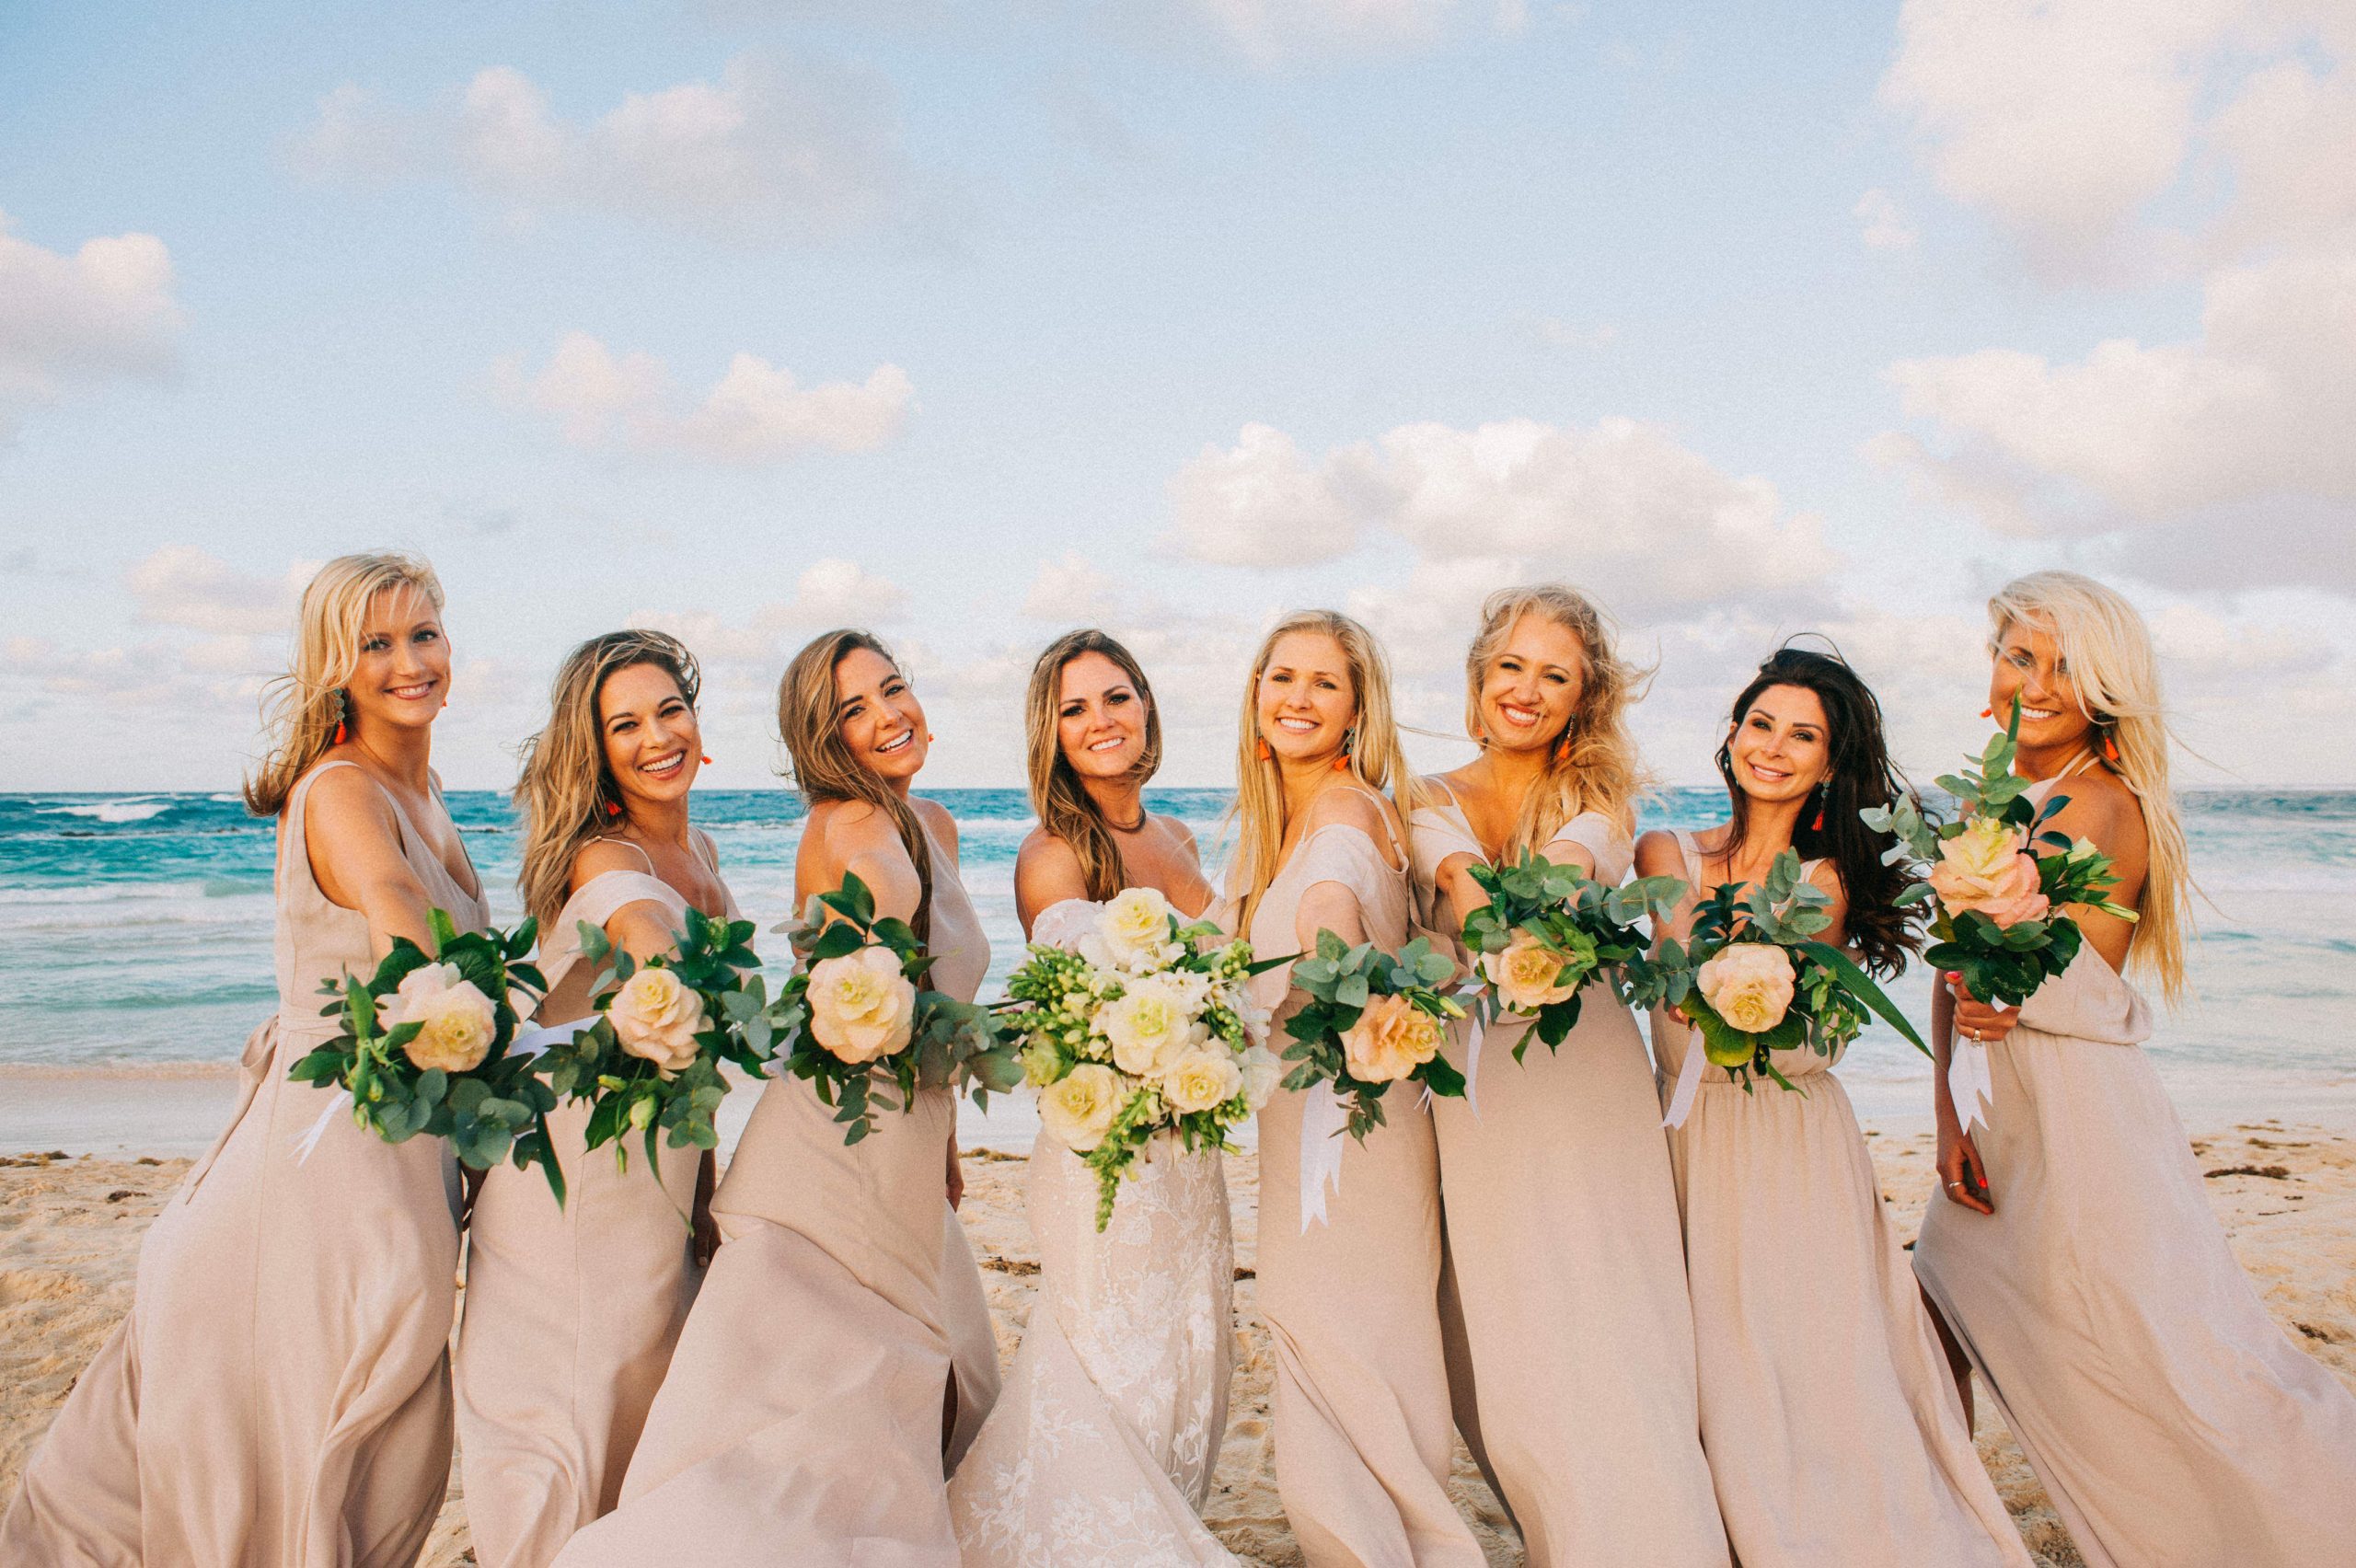 wedding maids with floral arrangements